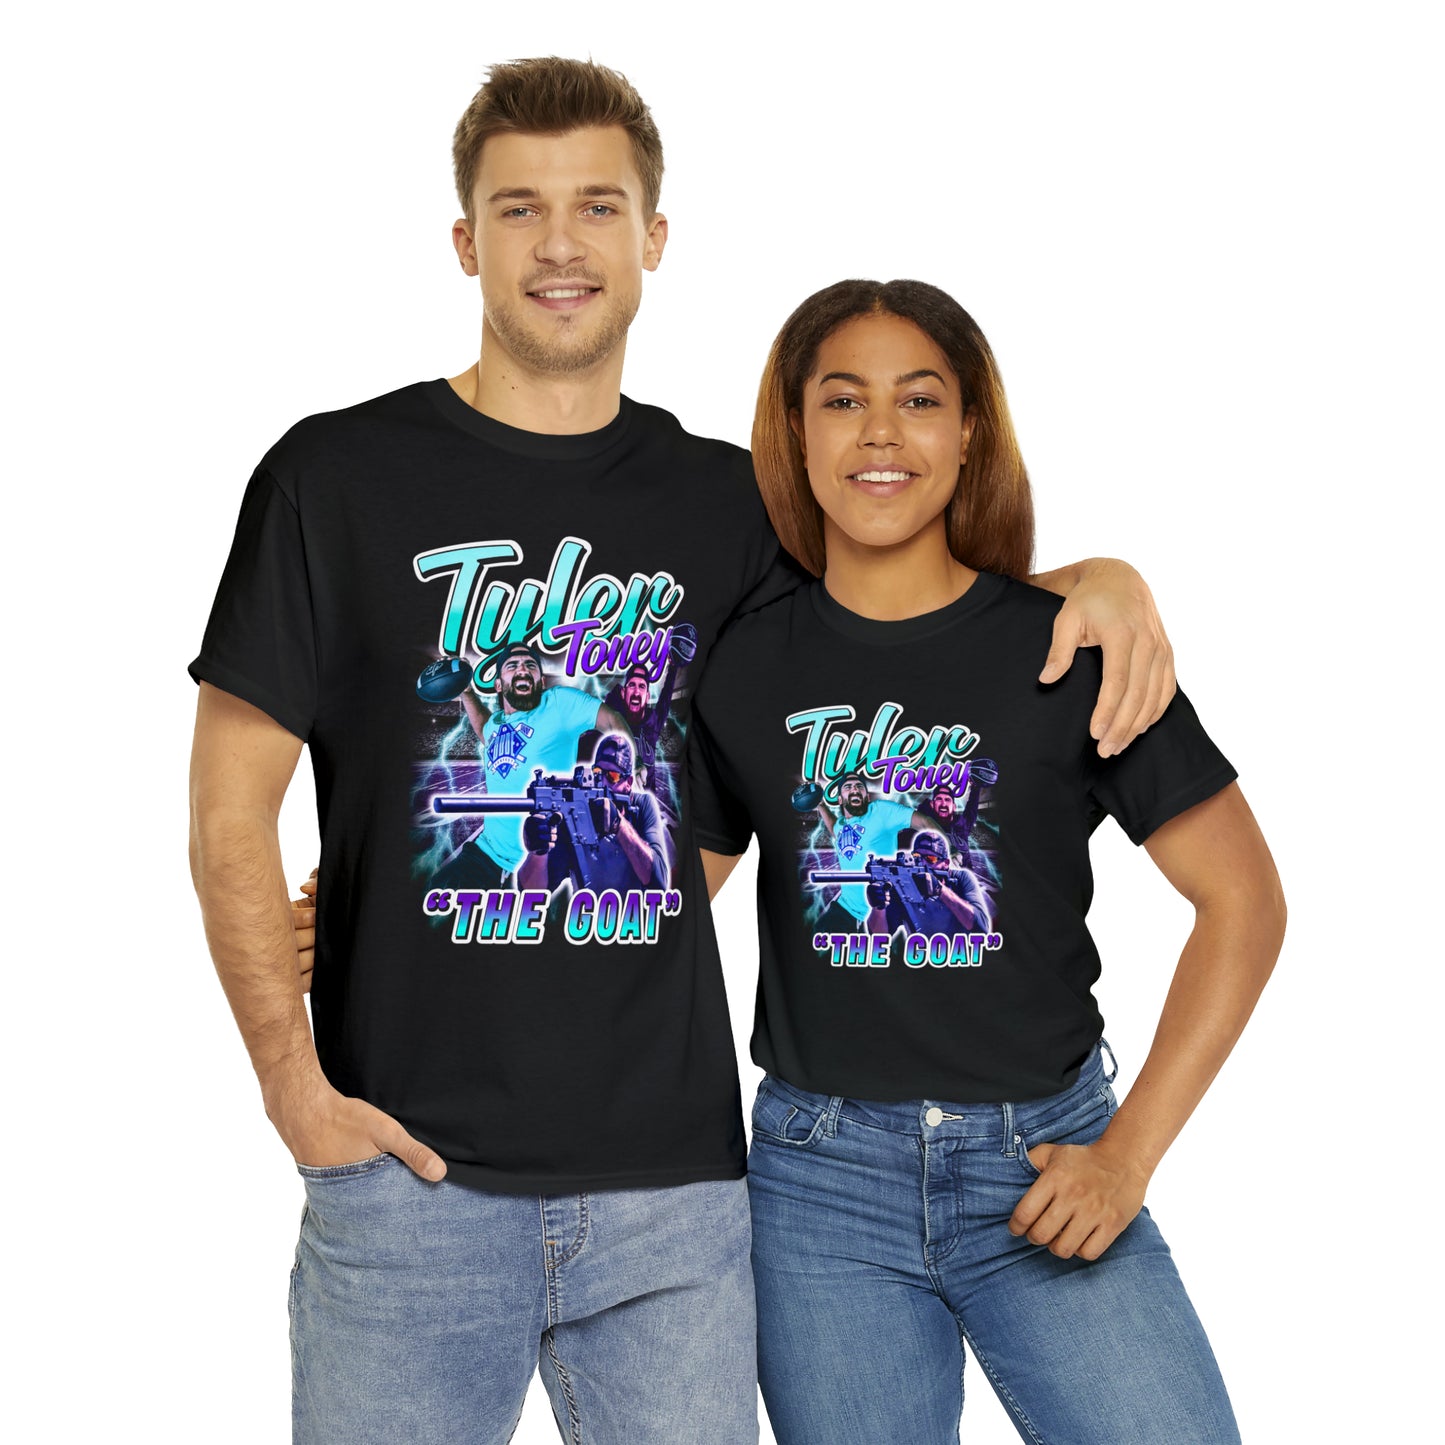 Tyler "The Goat" Toney T-Shirt!